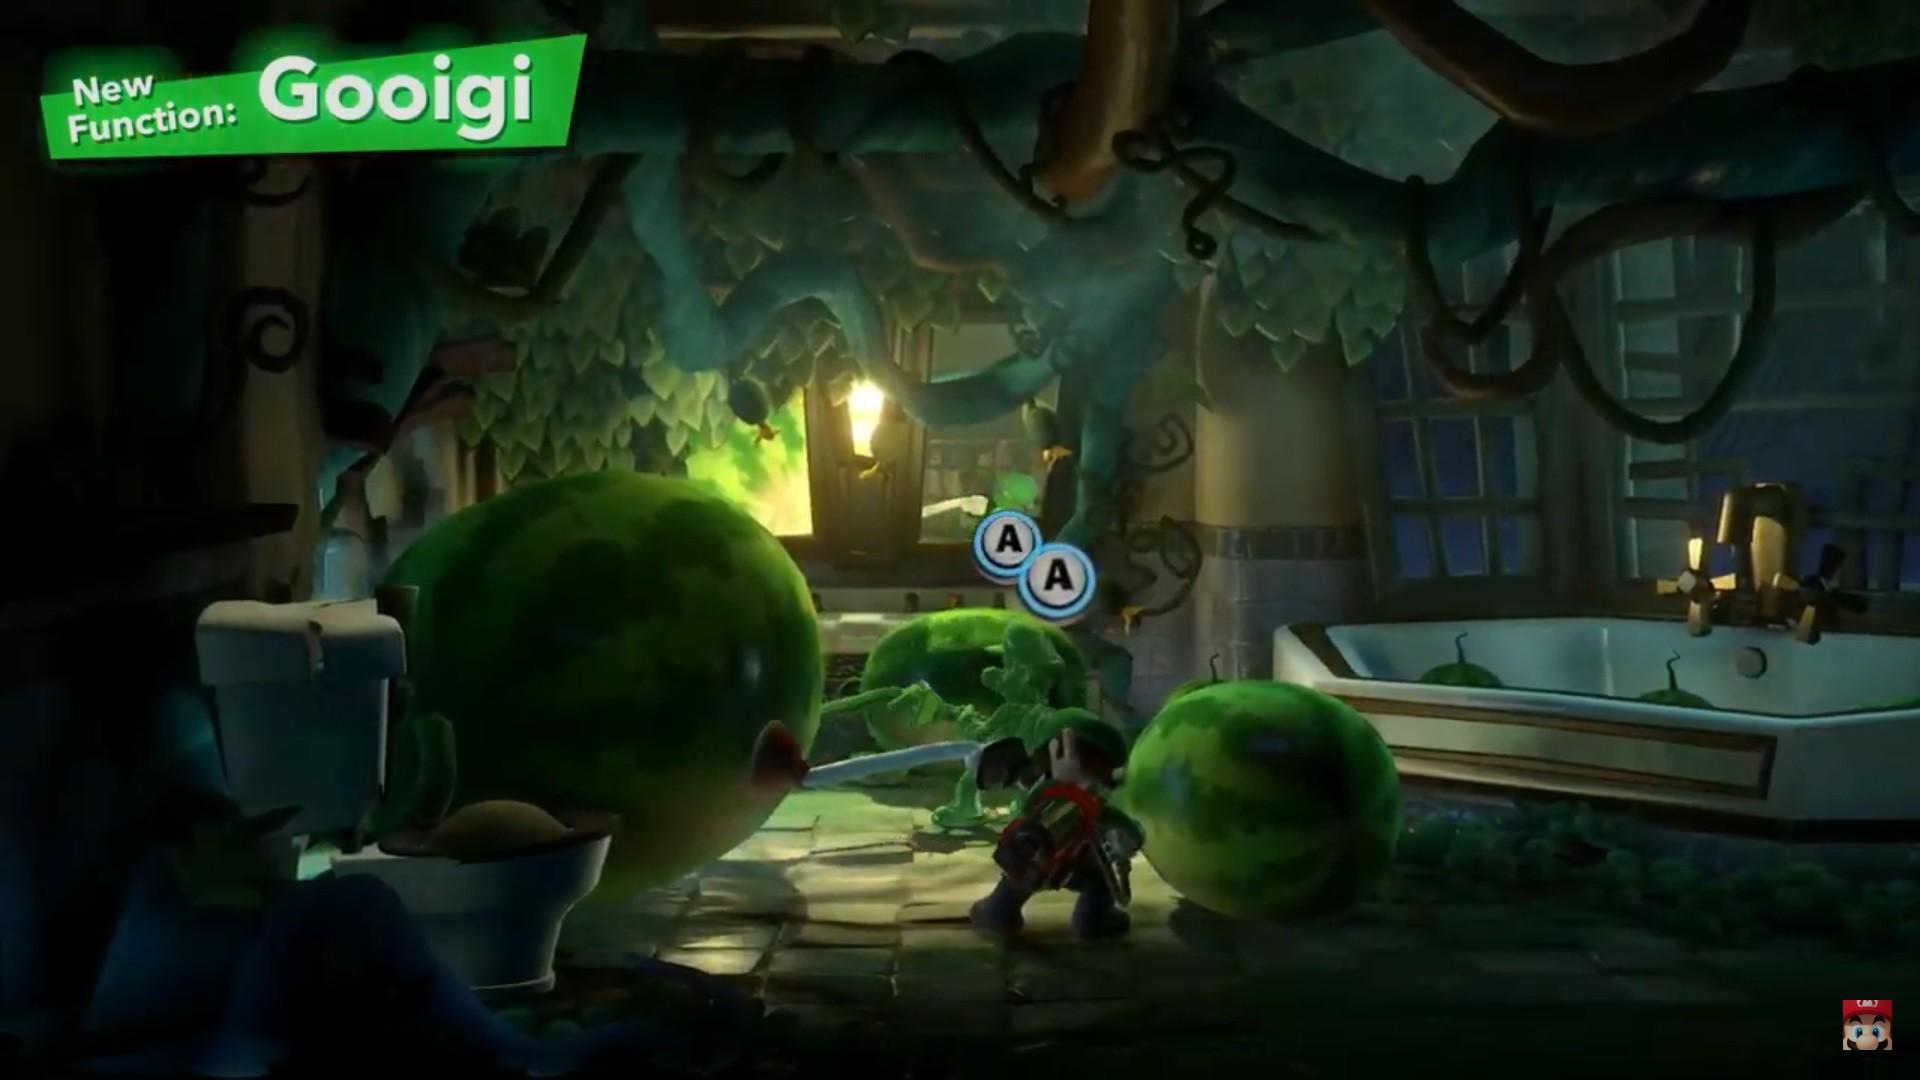 Nintendo shares more details about Luigi's Mansion 3